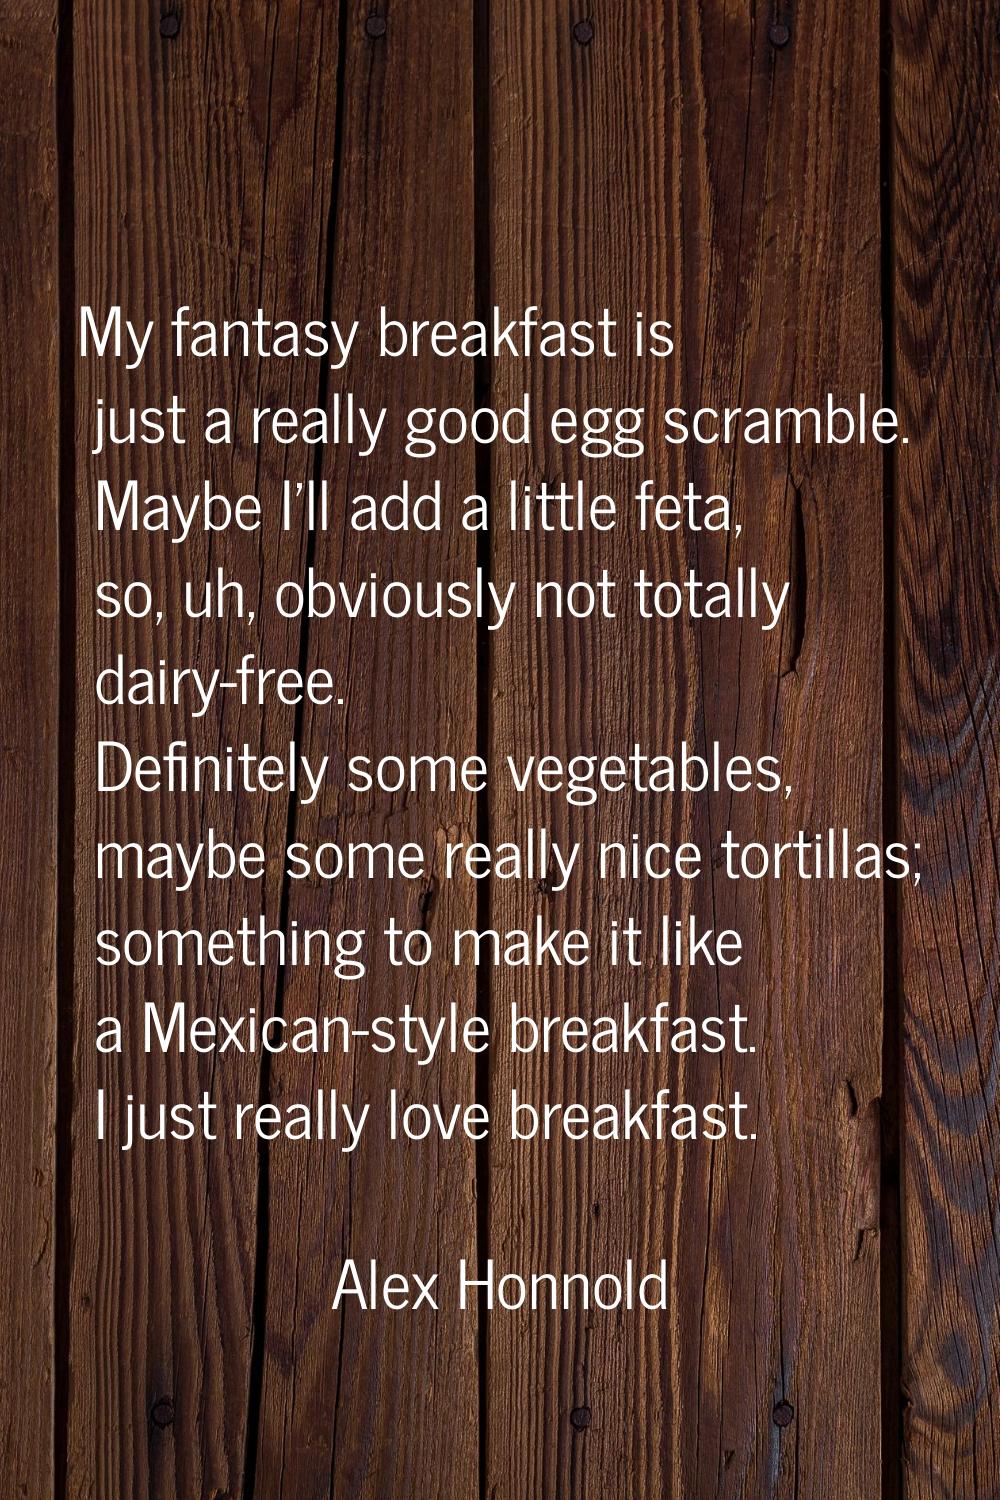 My fantasy breakfast is just a really good egg scramble. Maybe I'll add a little feta, so, uh, obvi